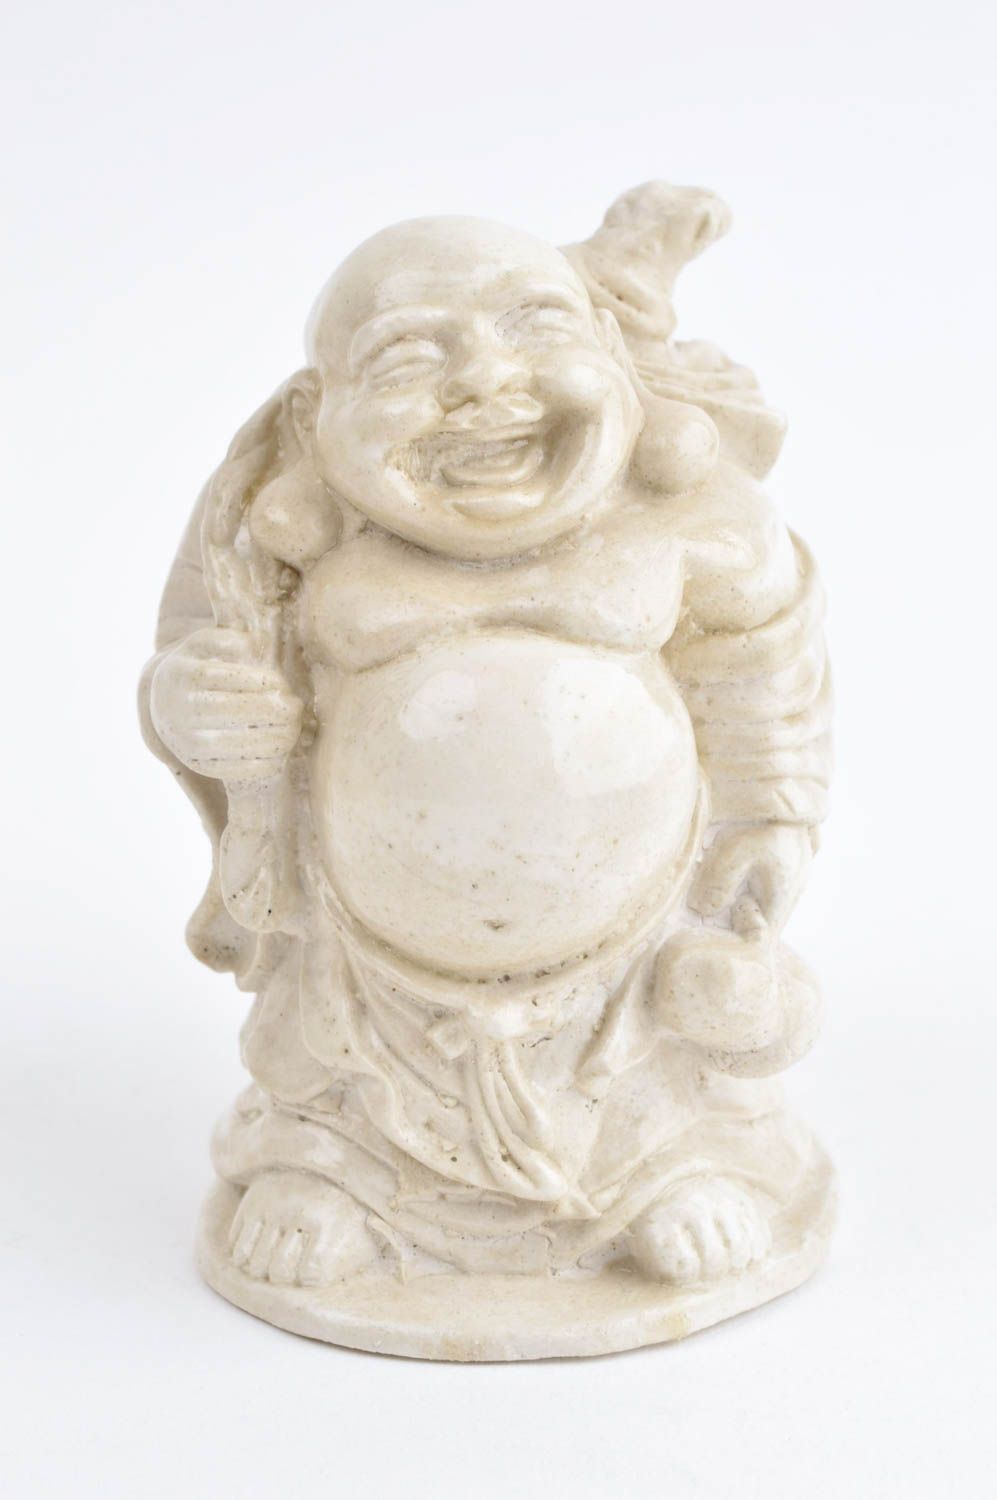 Handmade figurine designer statuette unusual souvenir decorative use only photo 2